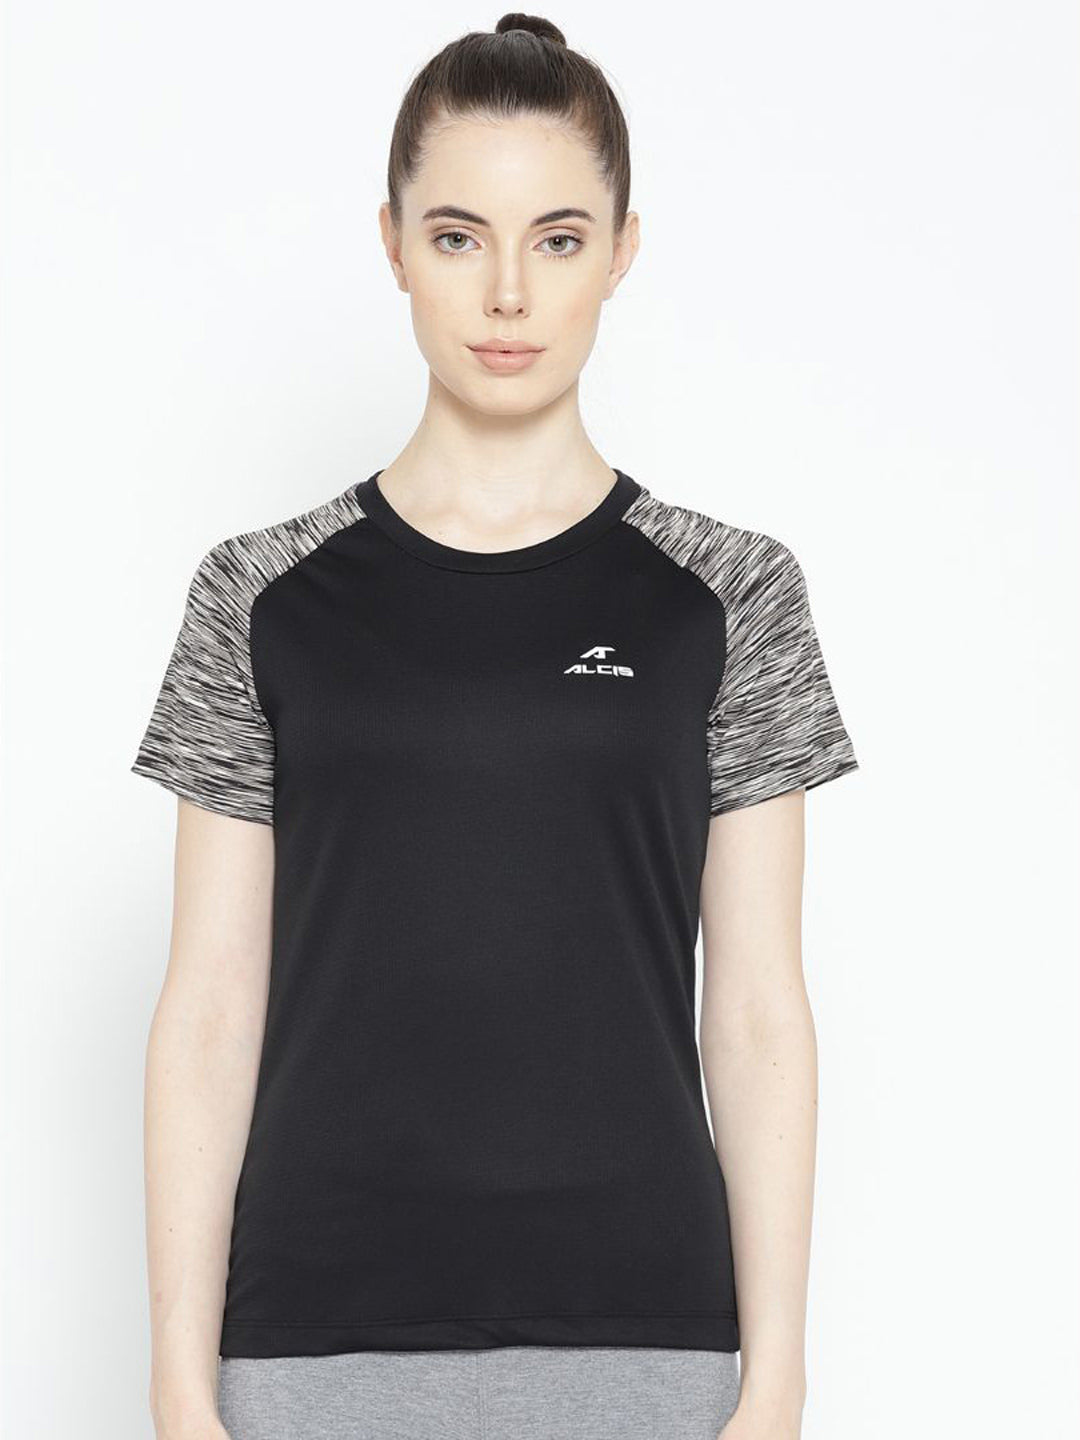 Alcis Women Black Solid Slim Fit Round Neck Training T-shirt